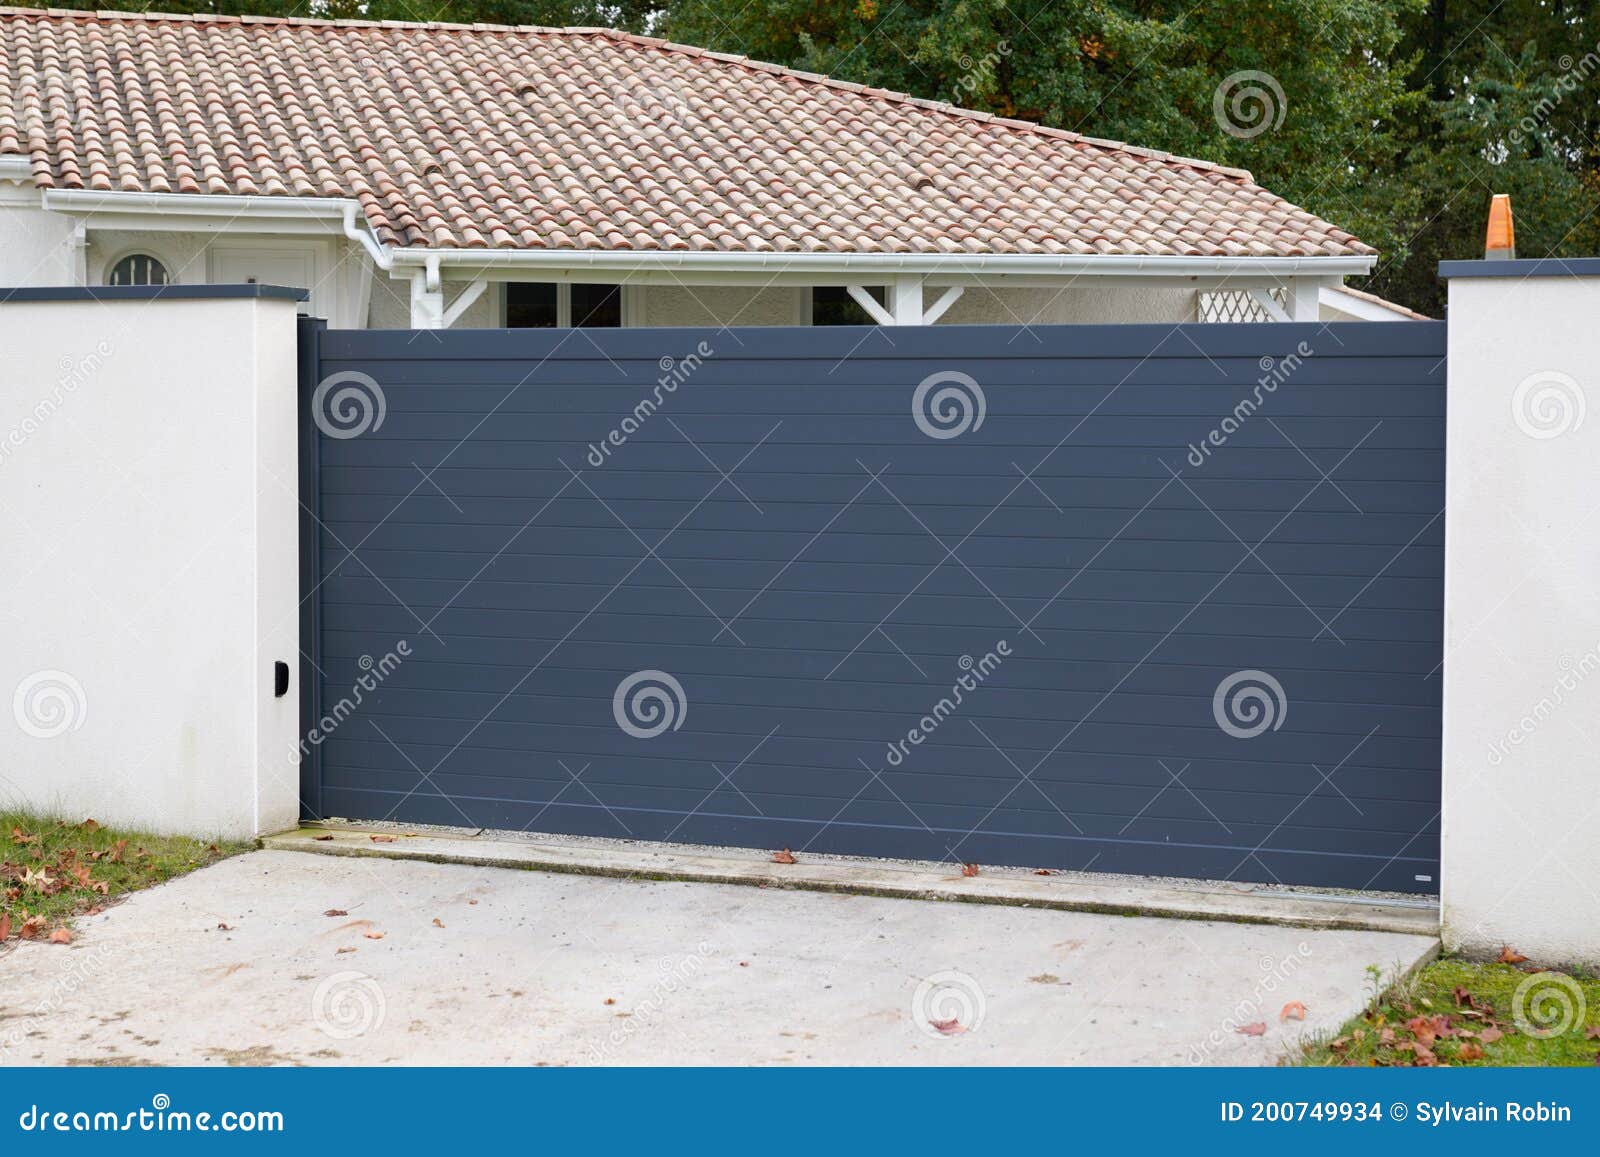 Sliding Gate Modern Aluminum Portal To Home Access Stock Photo ...